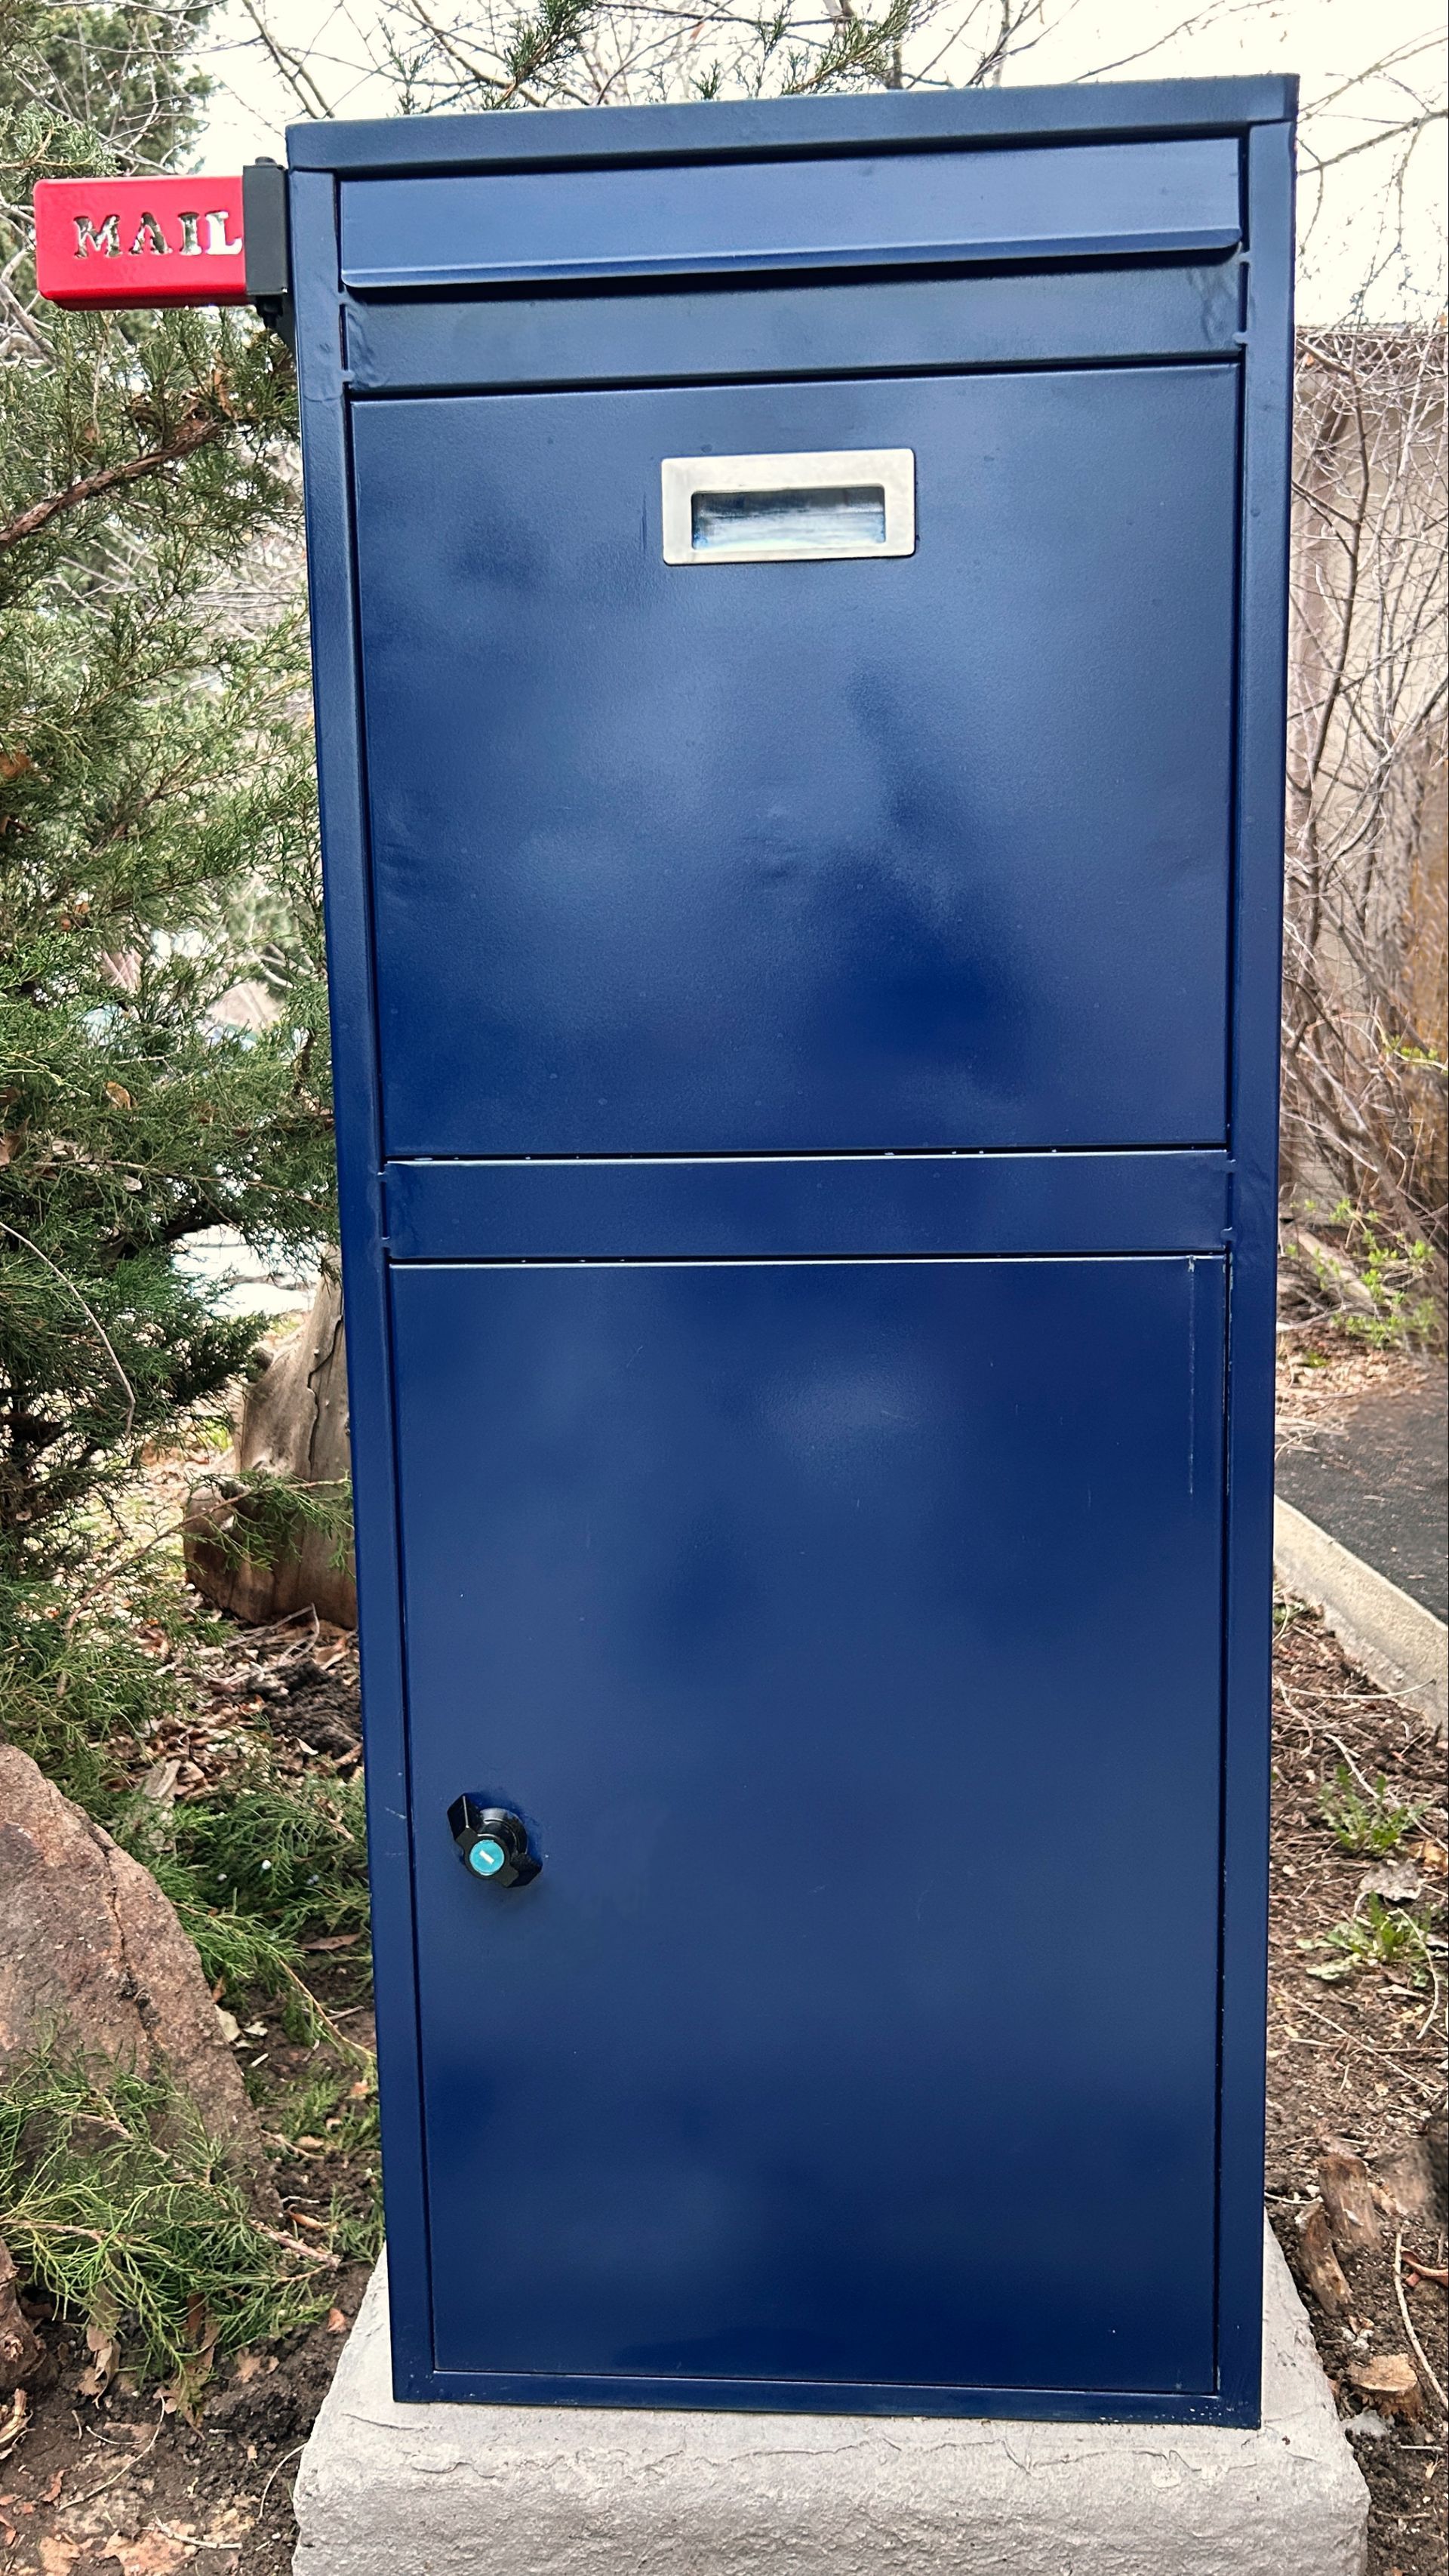 The Sharpist secure mailbox